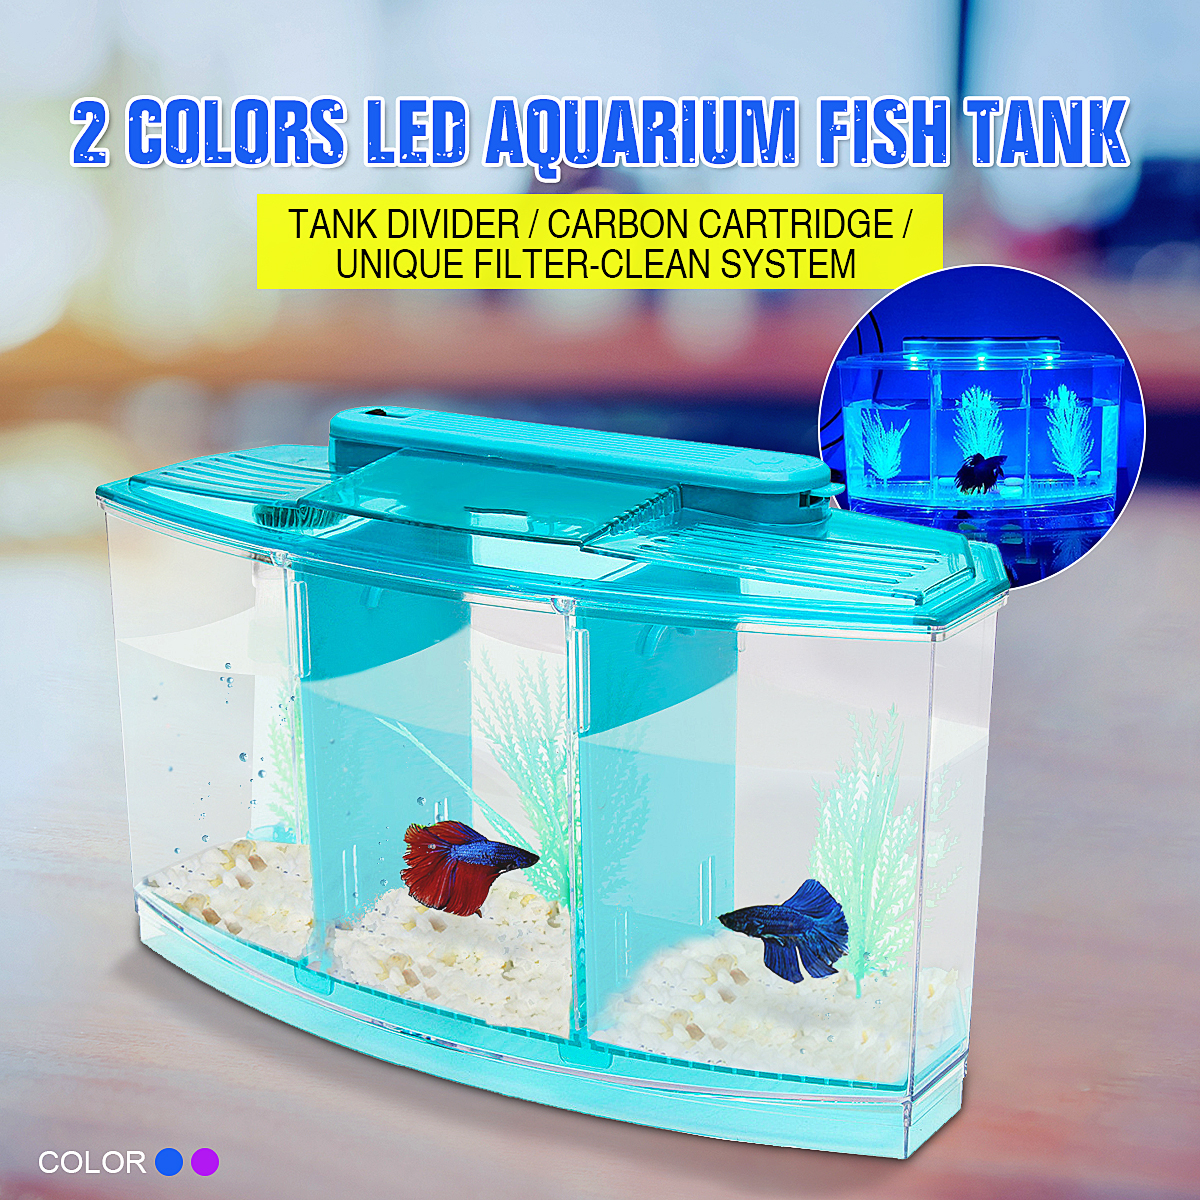 ZANLURE-Mini-Pool-Ecosystem-Aquarium-Fish-Tank-With-LED-Light-Fish-Aquarium-Tank-Divider-Filter-Wate-1721765-1